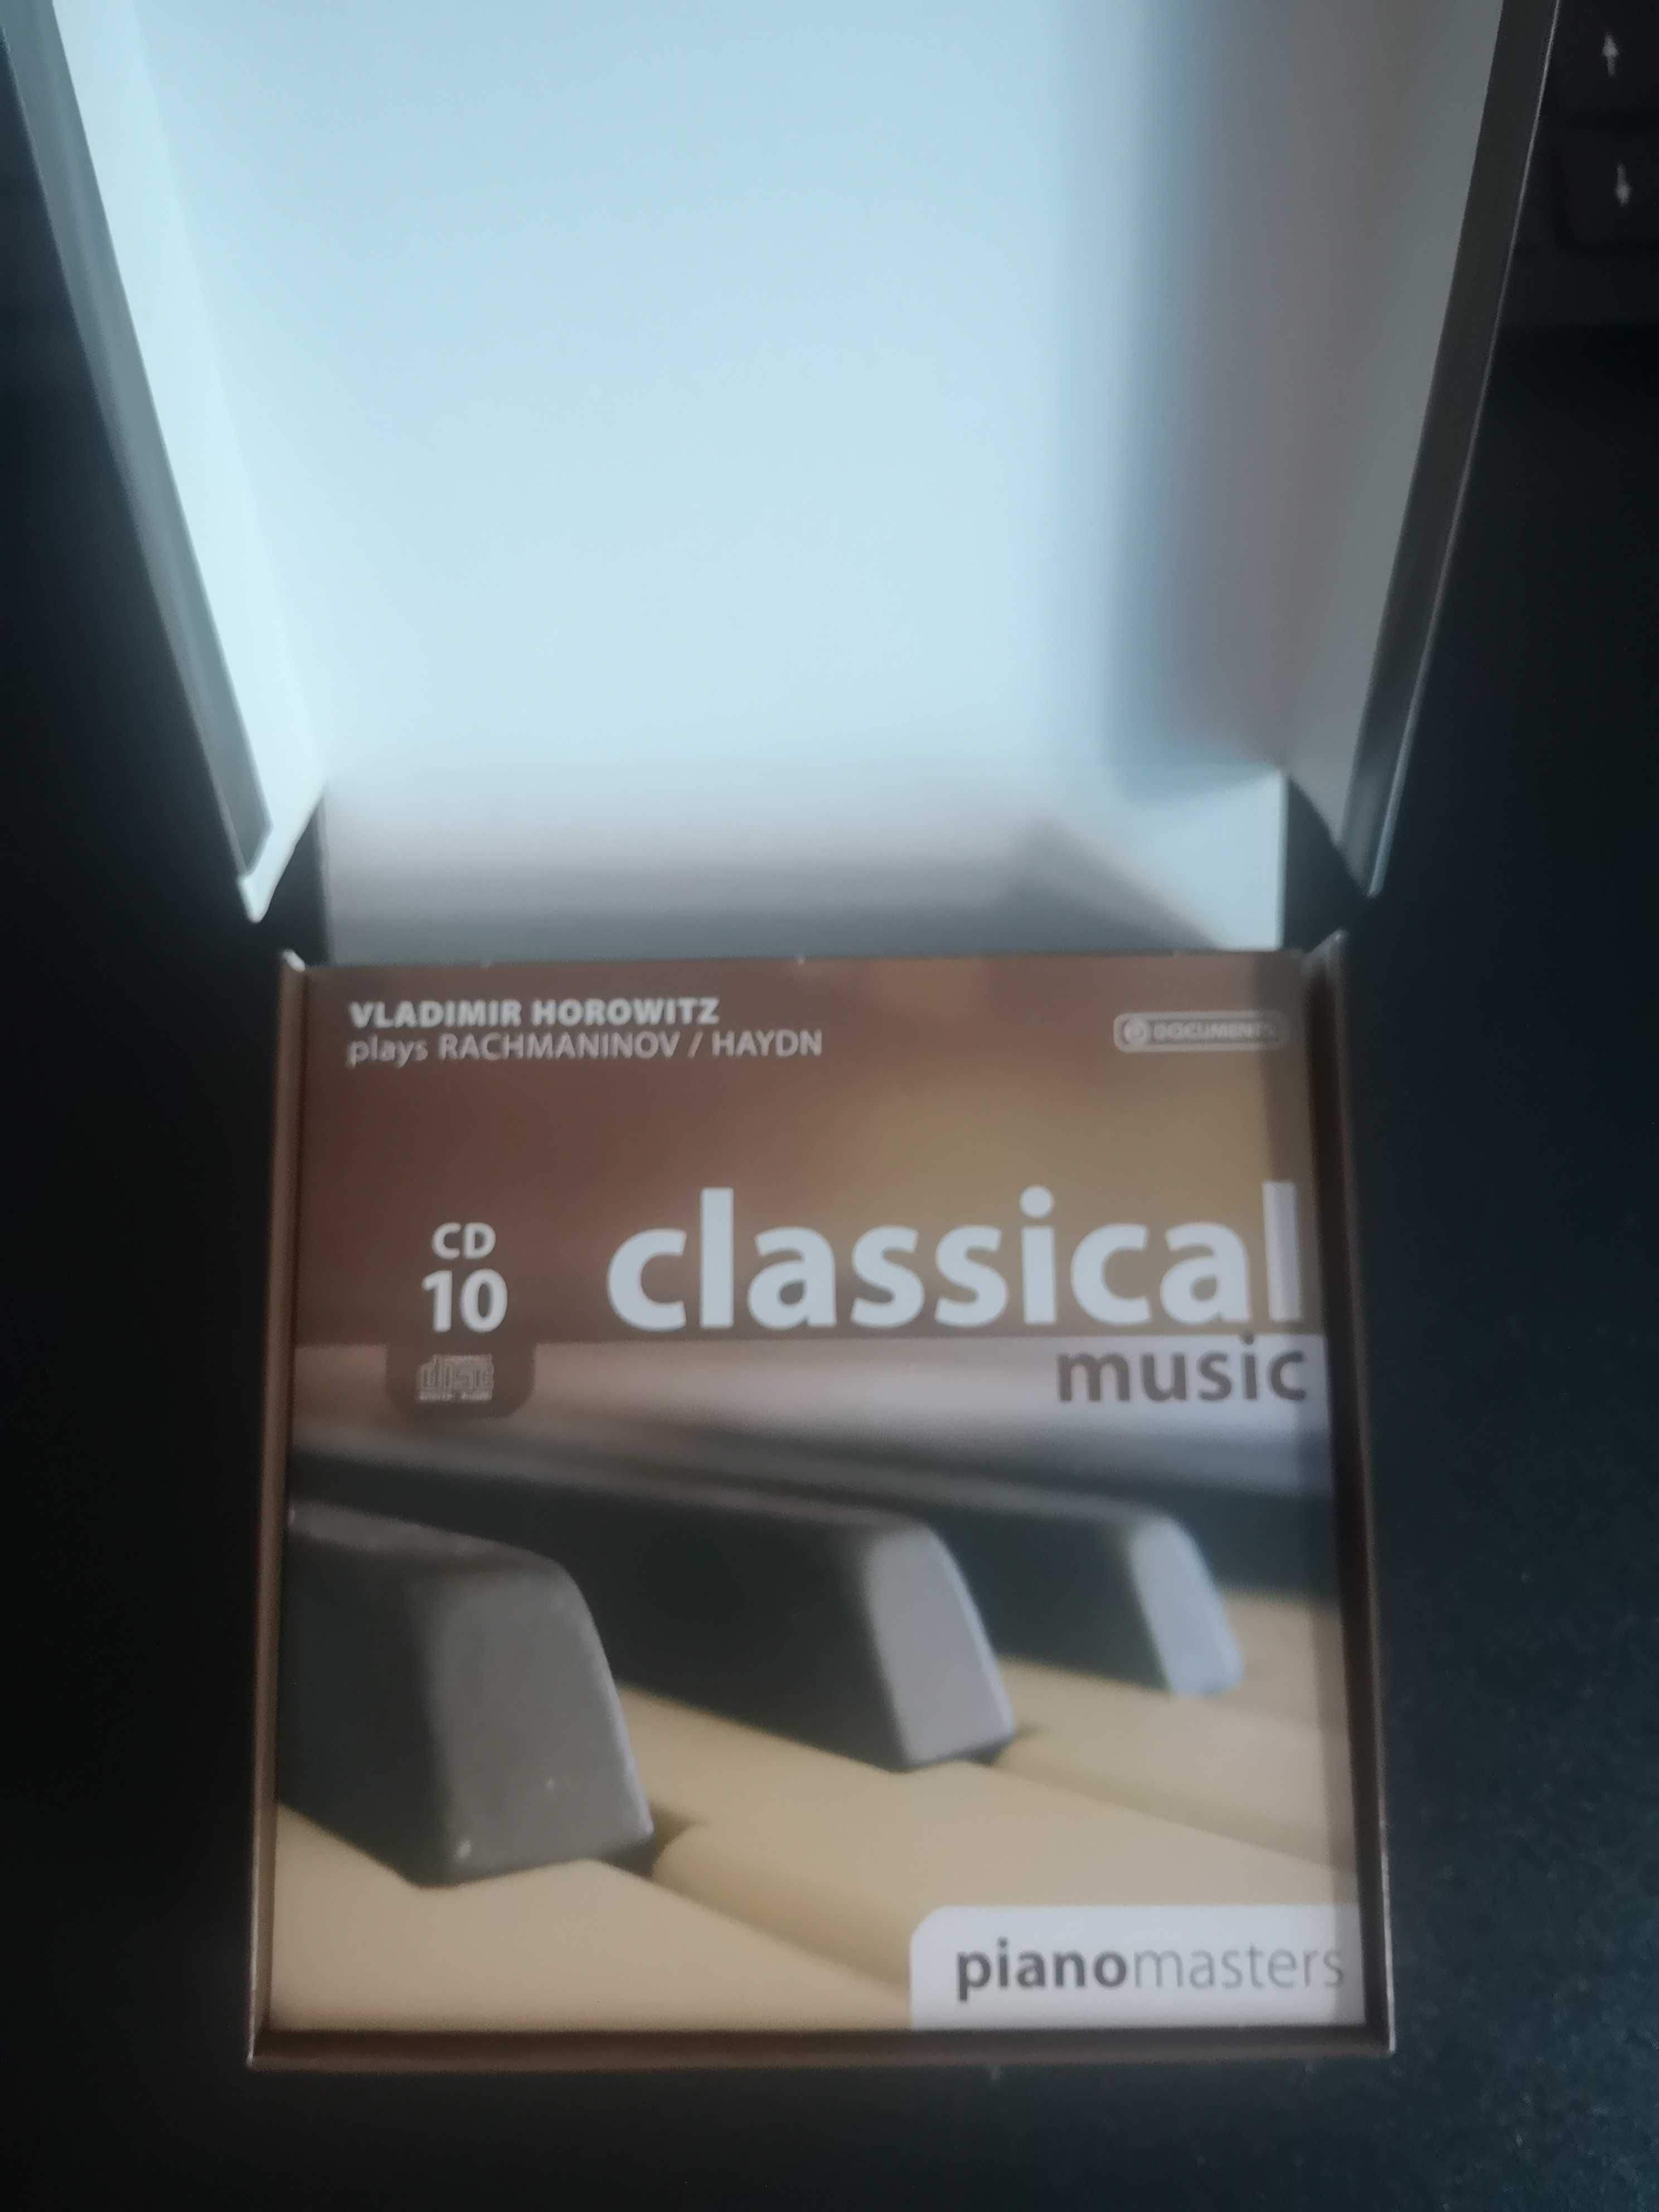 "Classical Piano Music" - 10 CDs